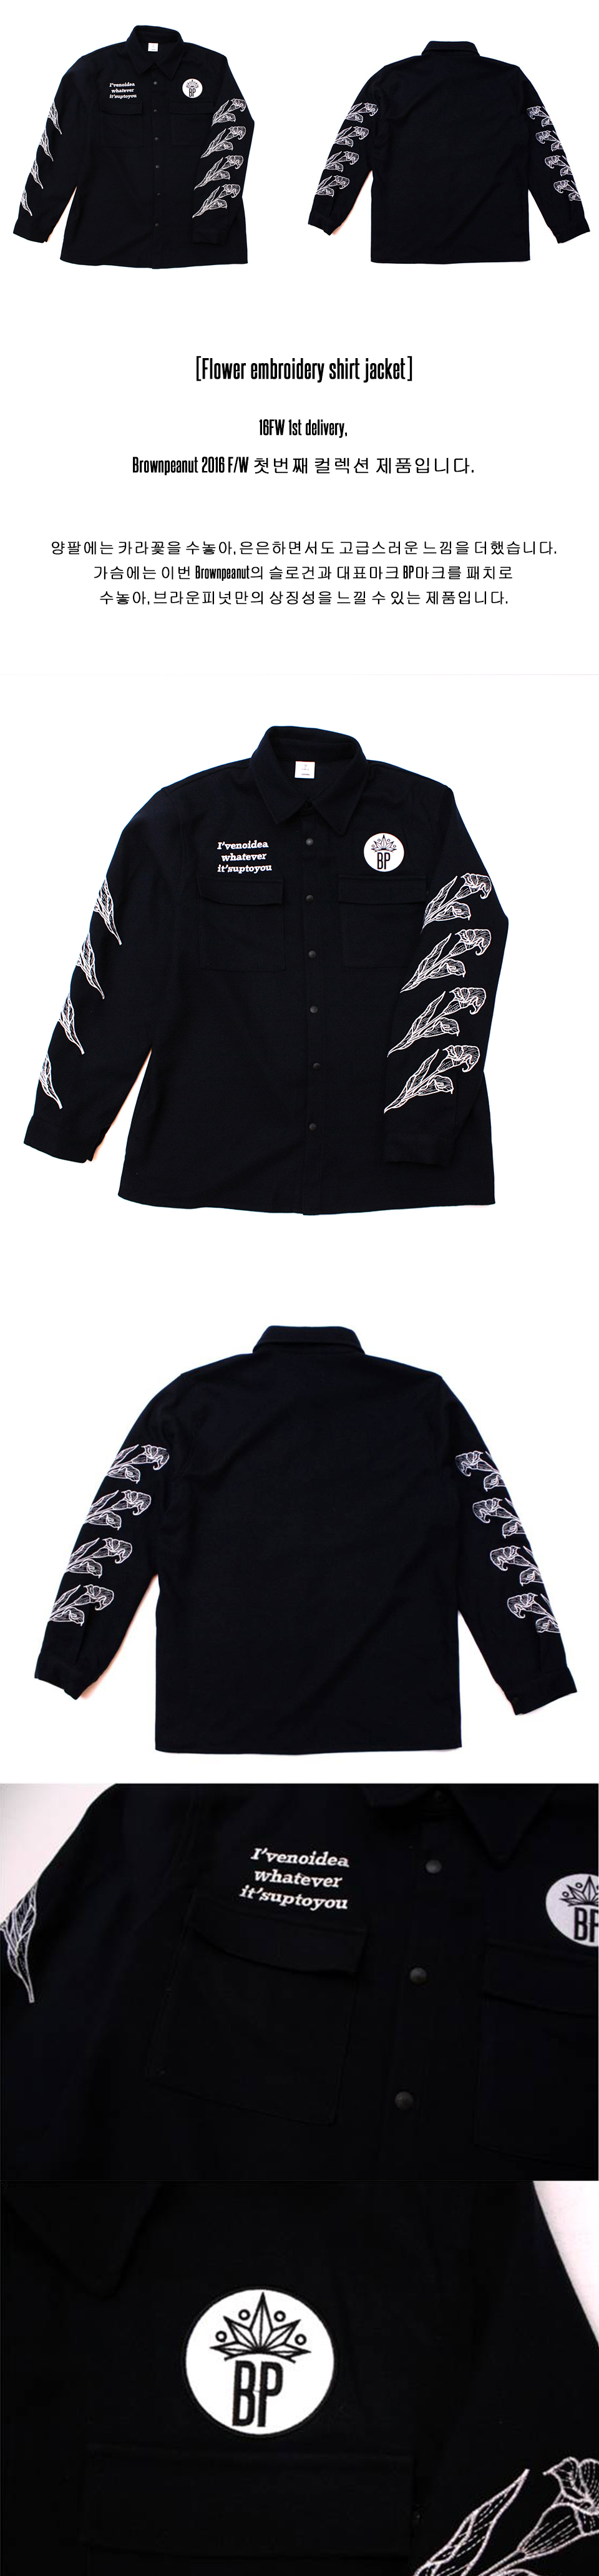 flower embroidery shirt jacket1.jpg